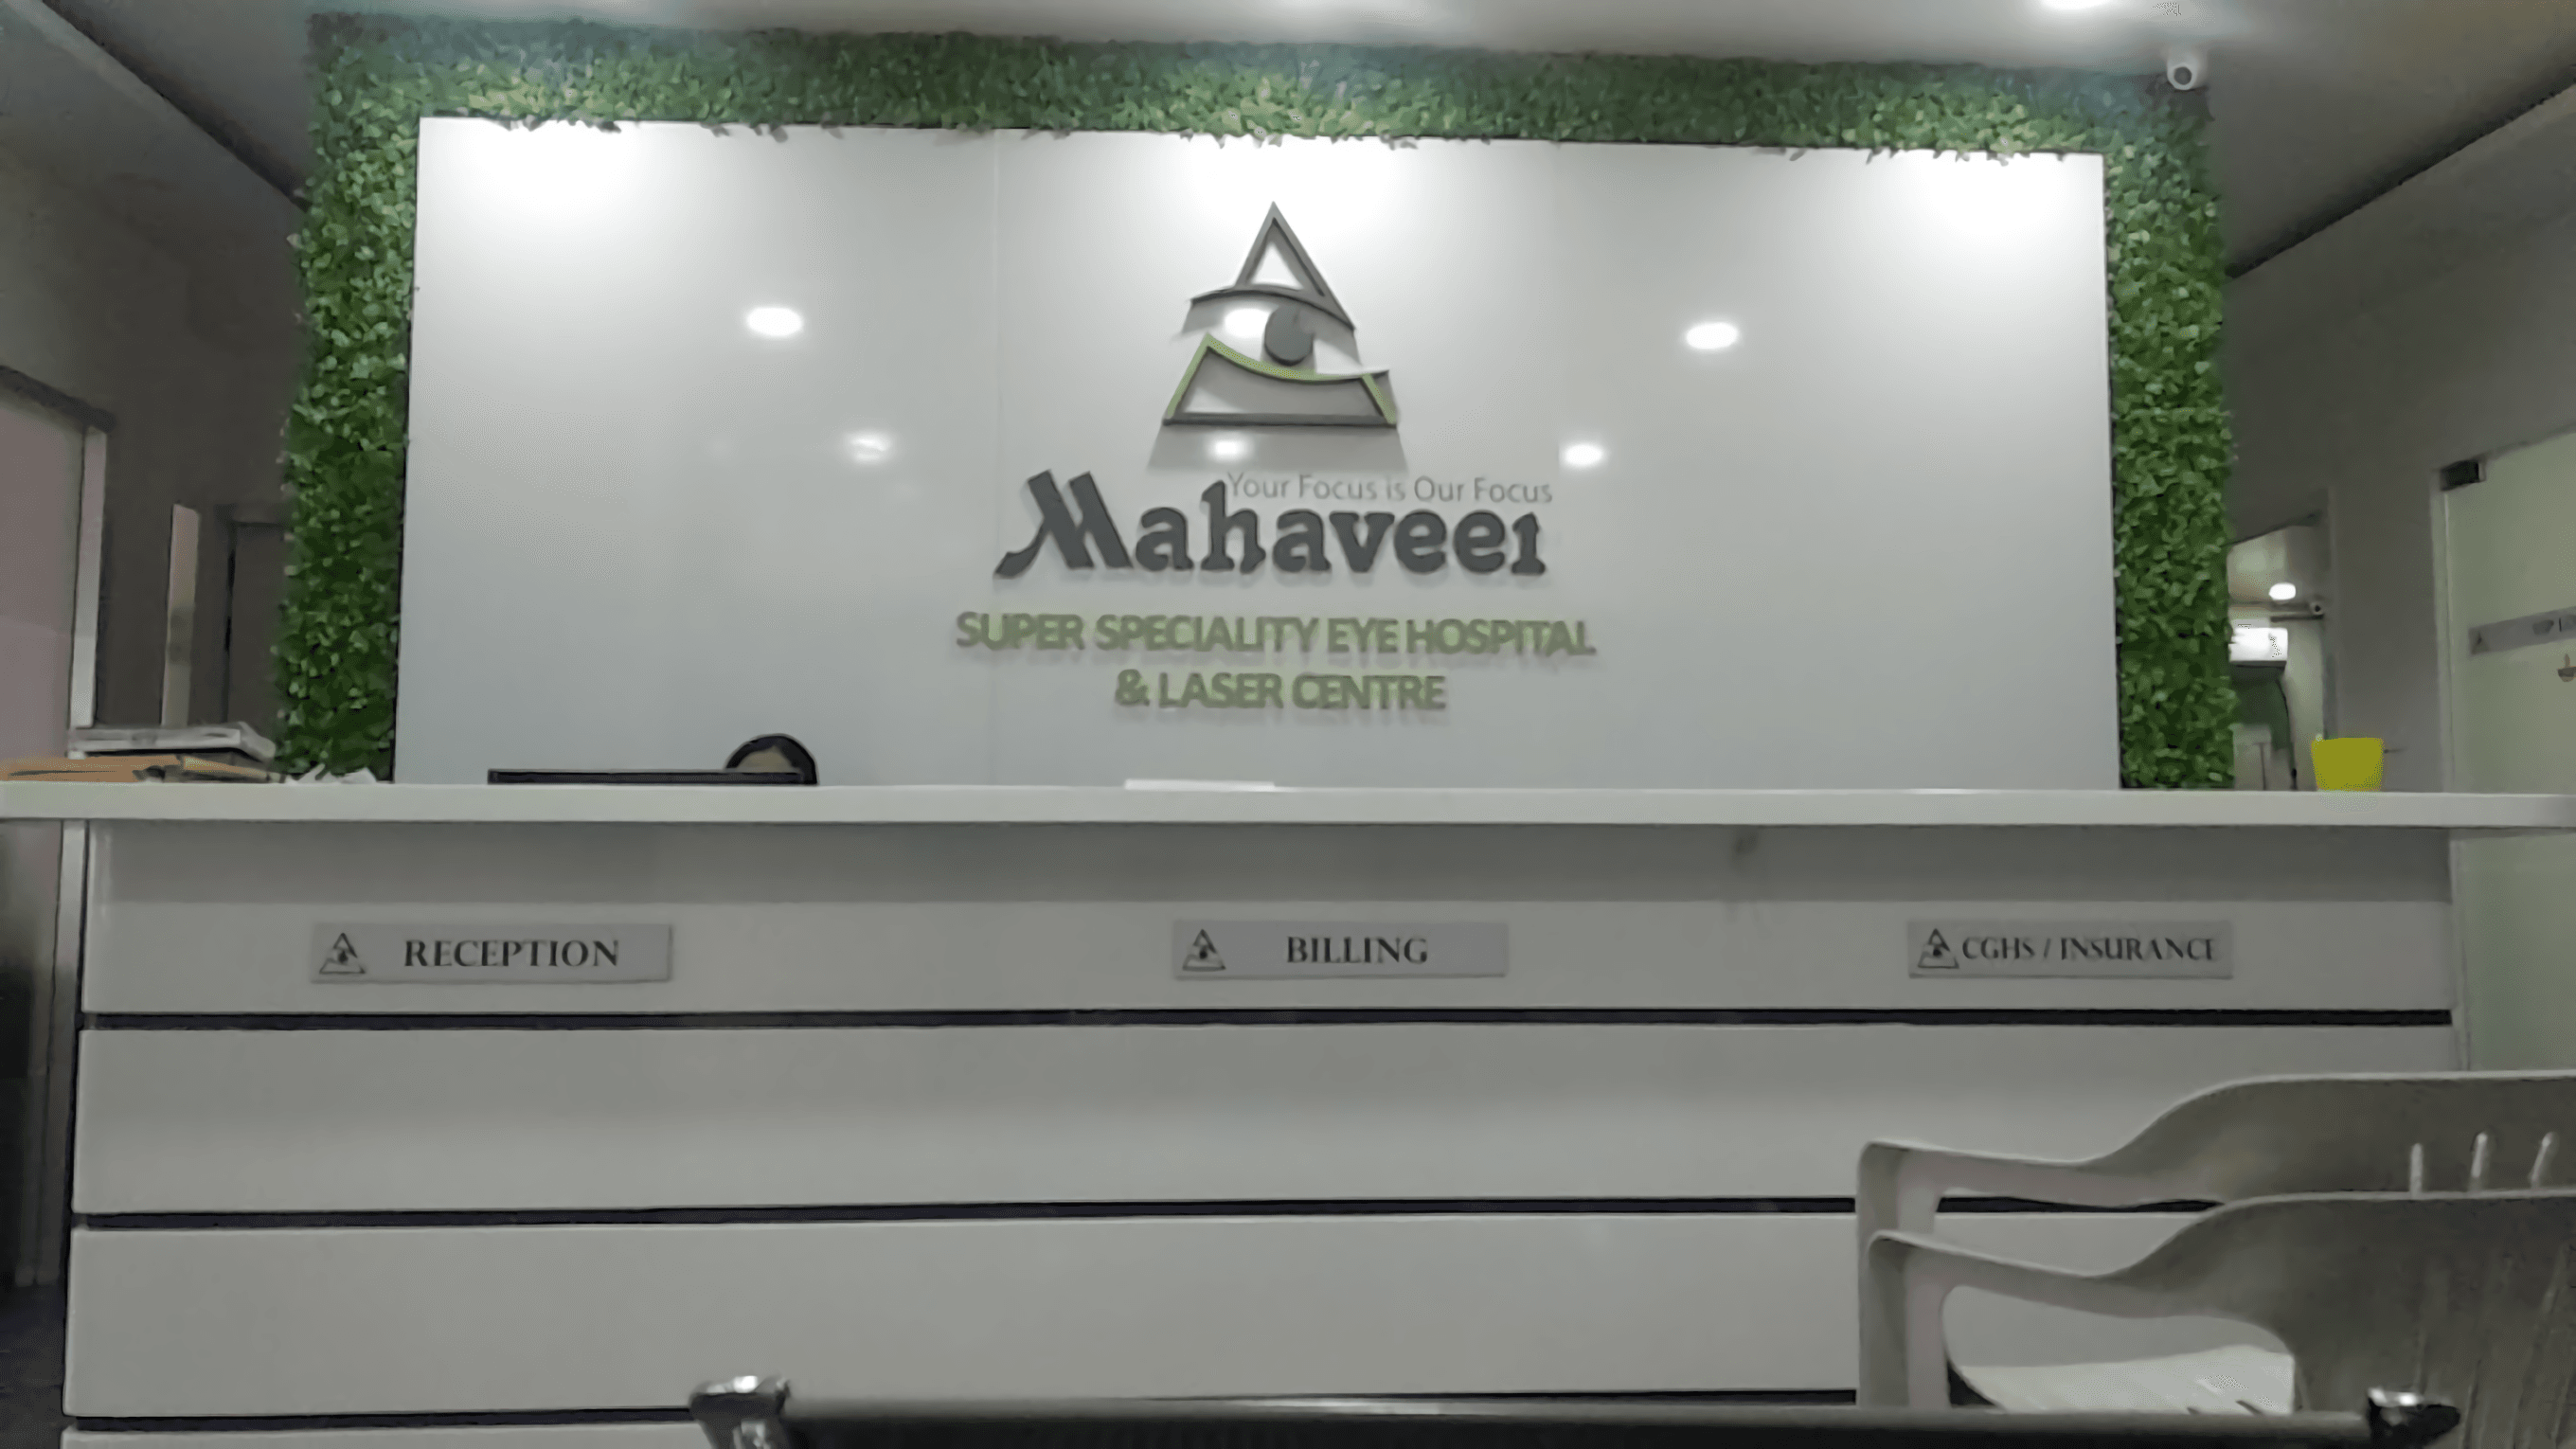 Mahaveer Super Speciality Eye Hospital & Laser Centre